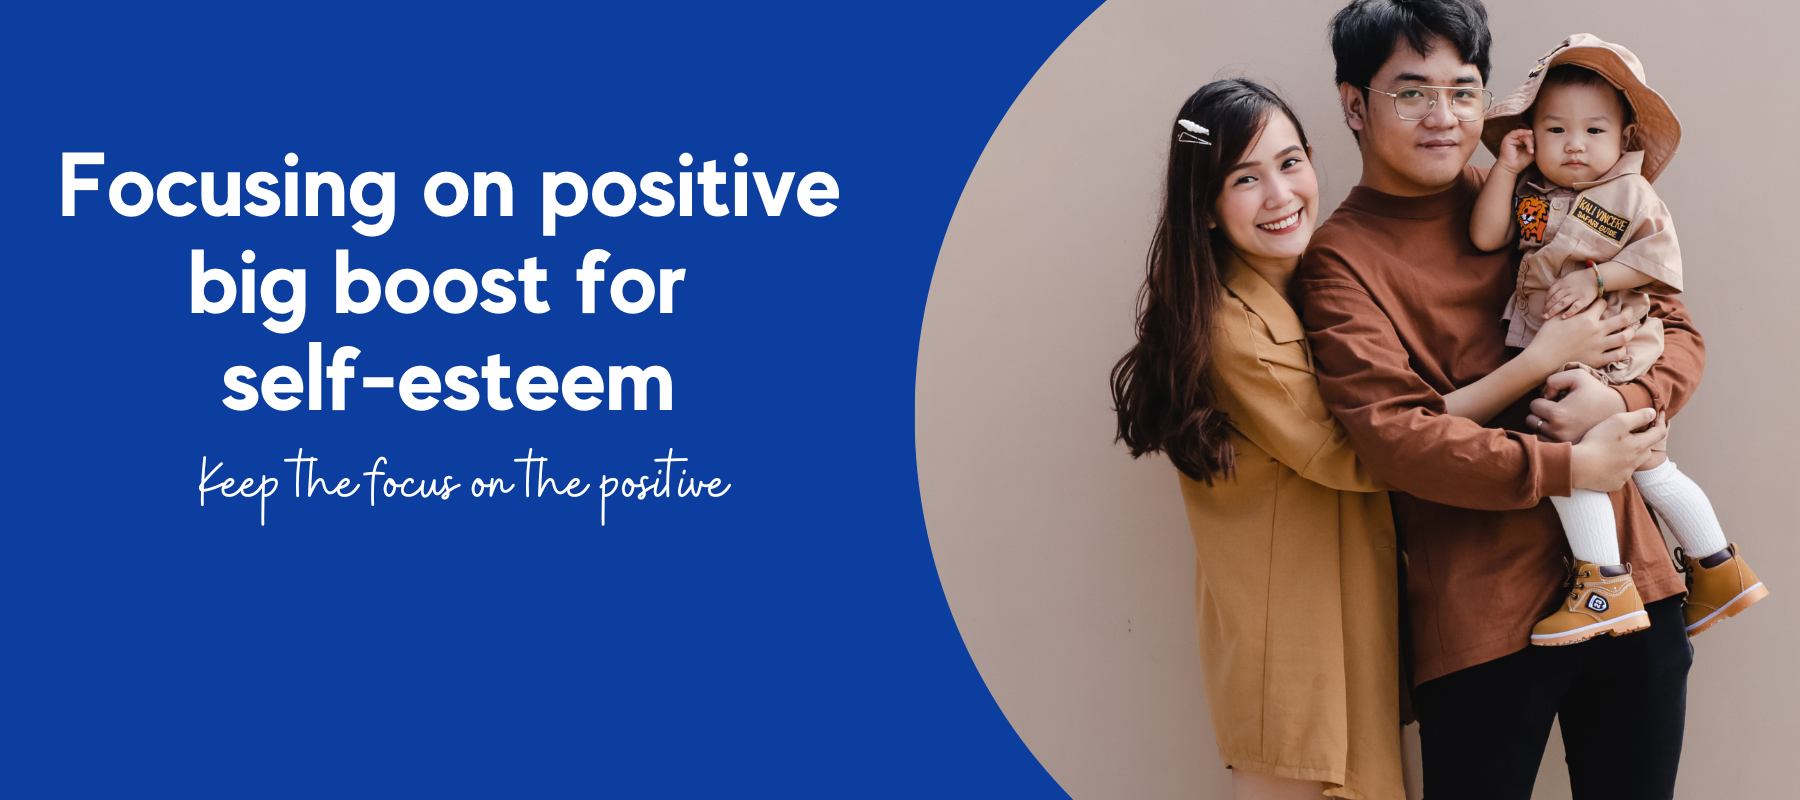 Focusing on positive big boost for self-esteem